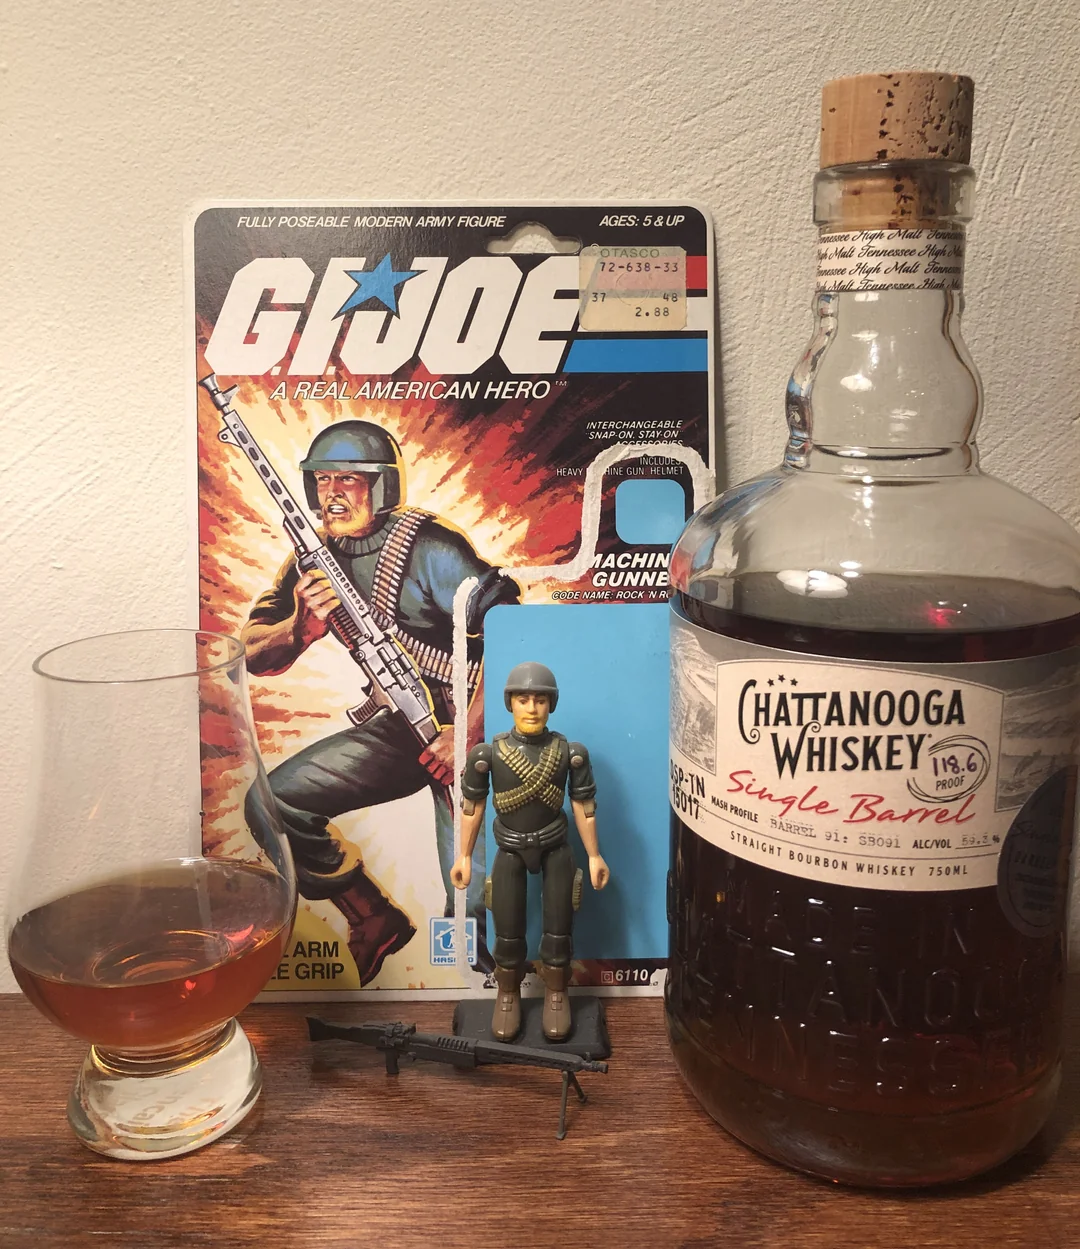 Reddit Review - Chattanooga Whiskey Single Barrel SB091